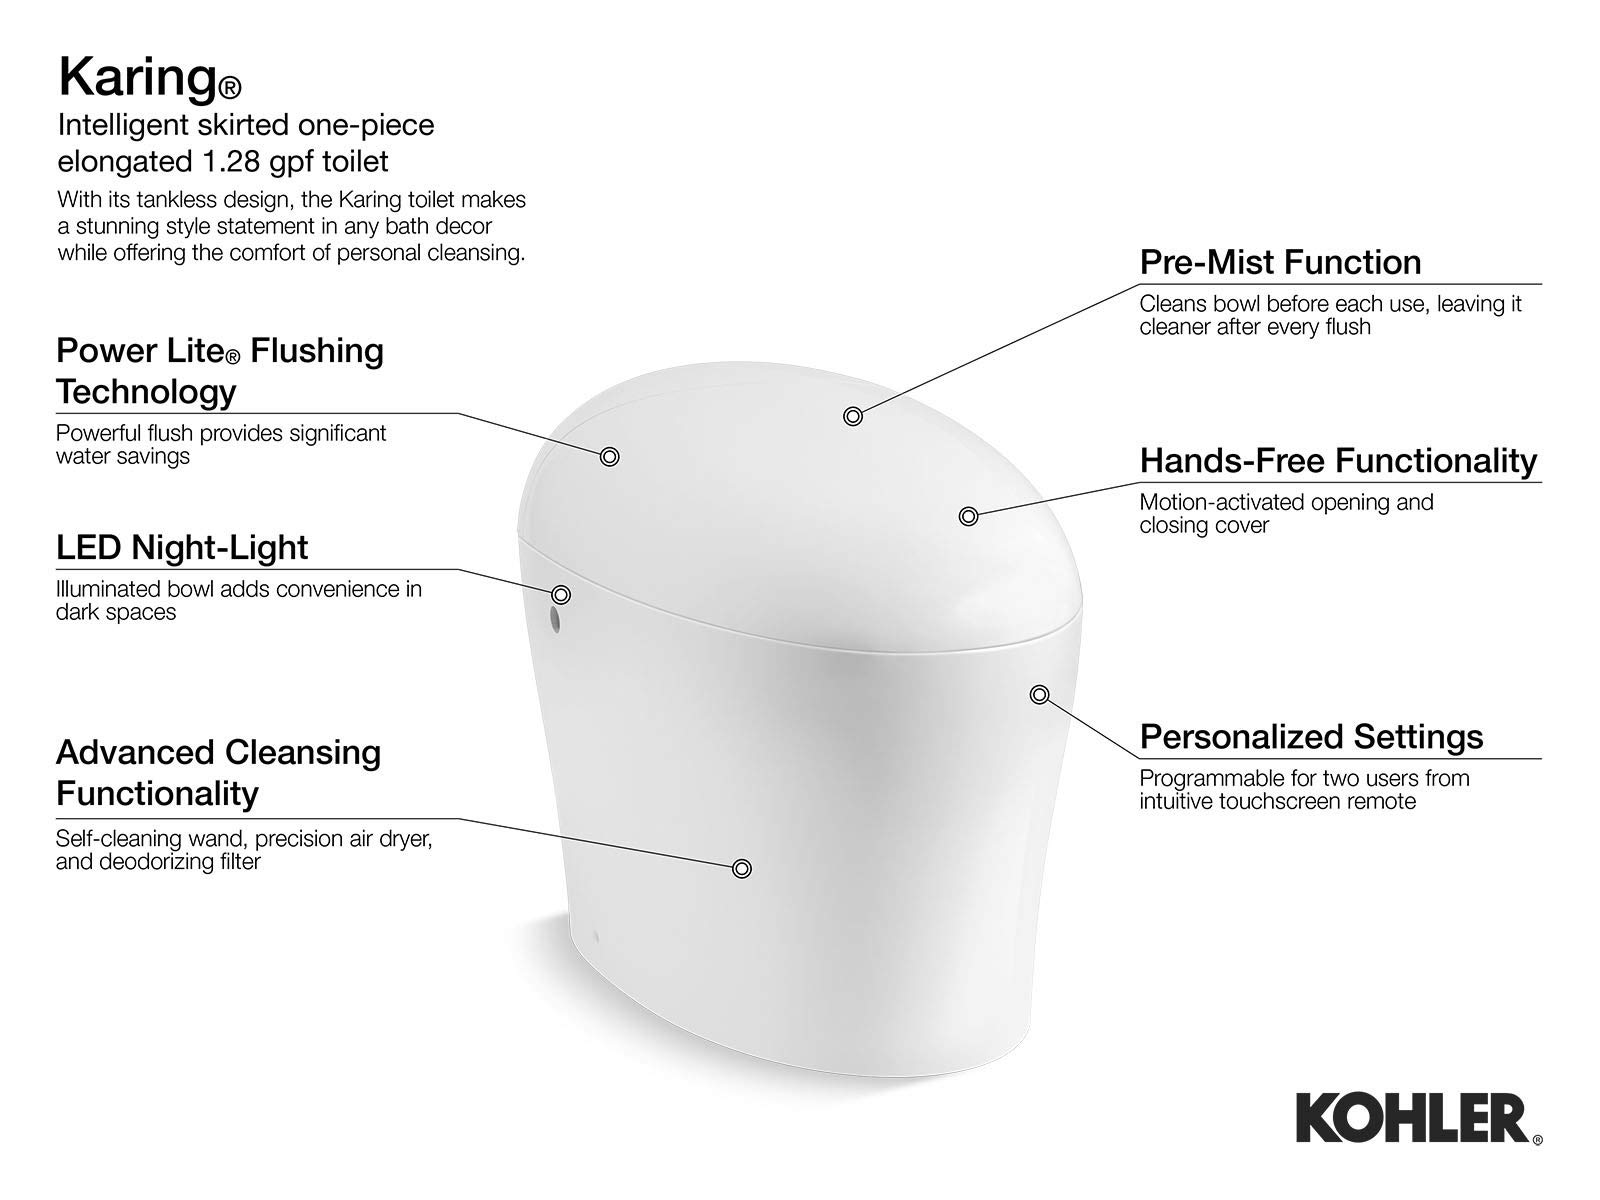 Kohler K-77780-0 Karing 2.0 Skirted One-Piece Elongated Intelligent Toilet, White